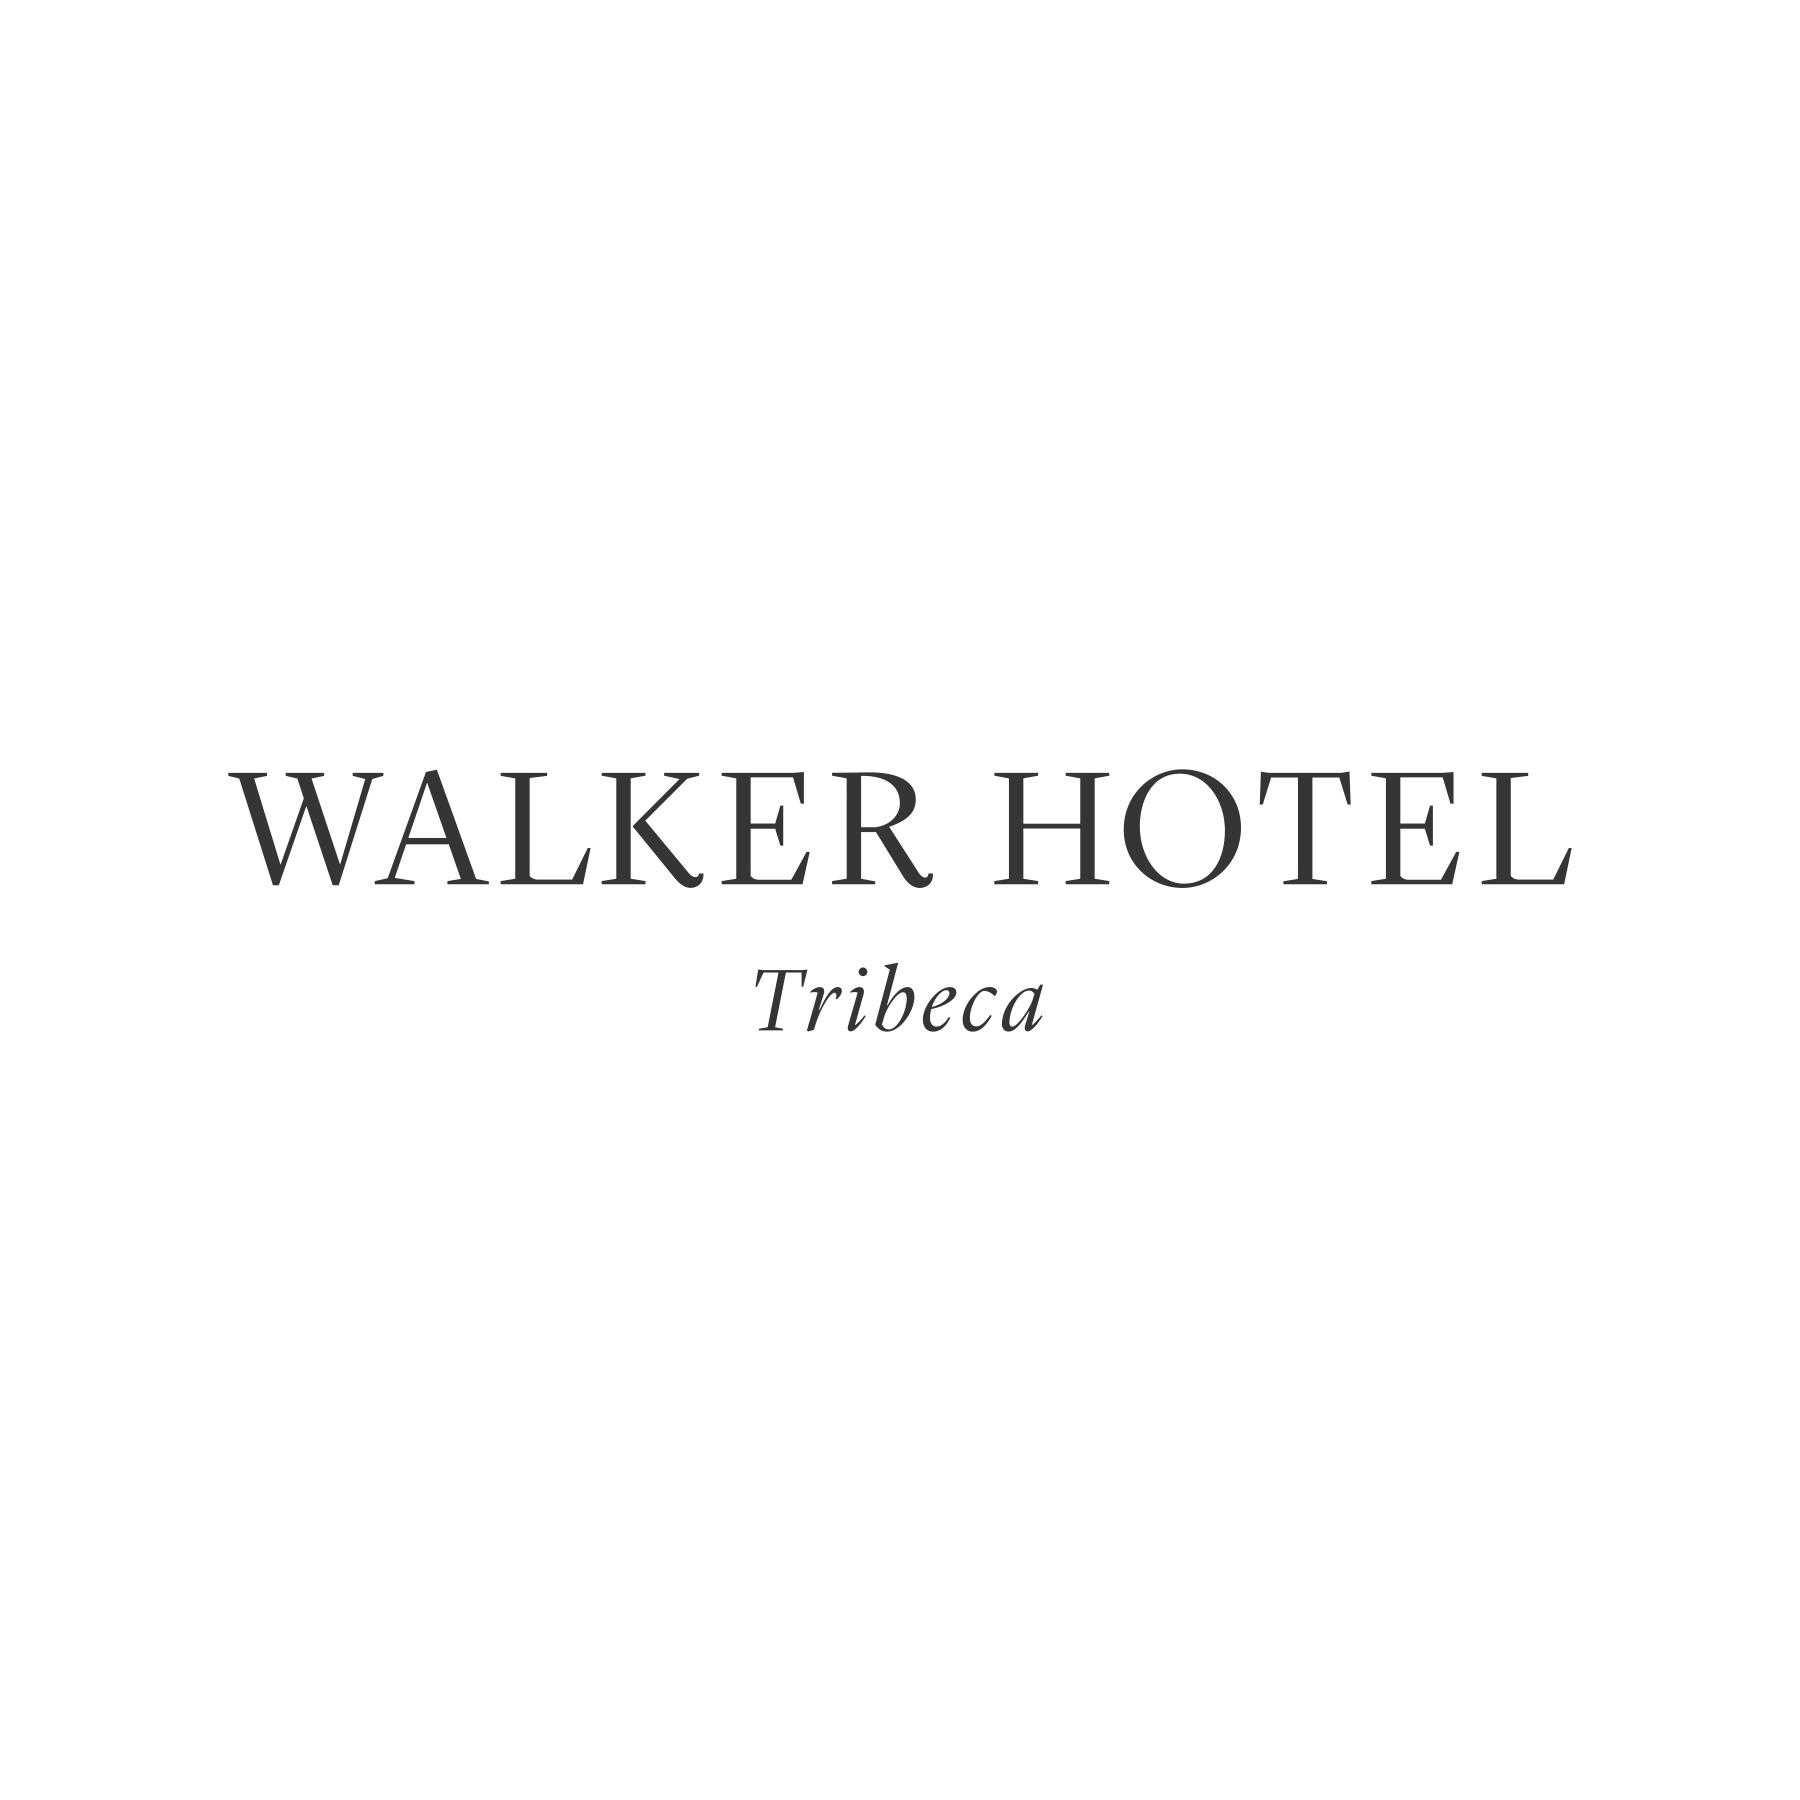 Walker Hotel Tribeca - New York, NY 10013 - (212)735-8000 | ShowMeLocal.com